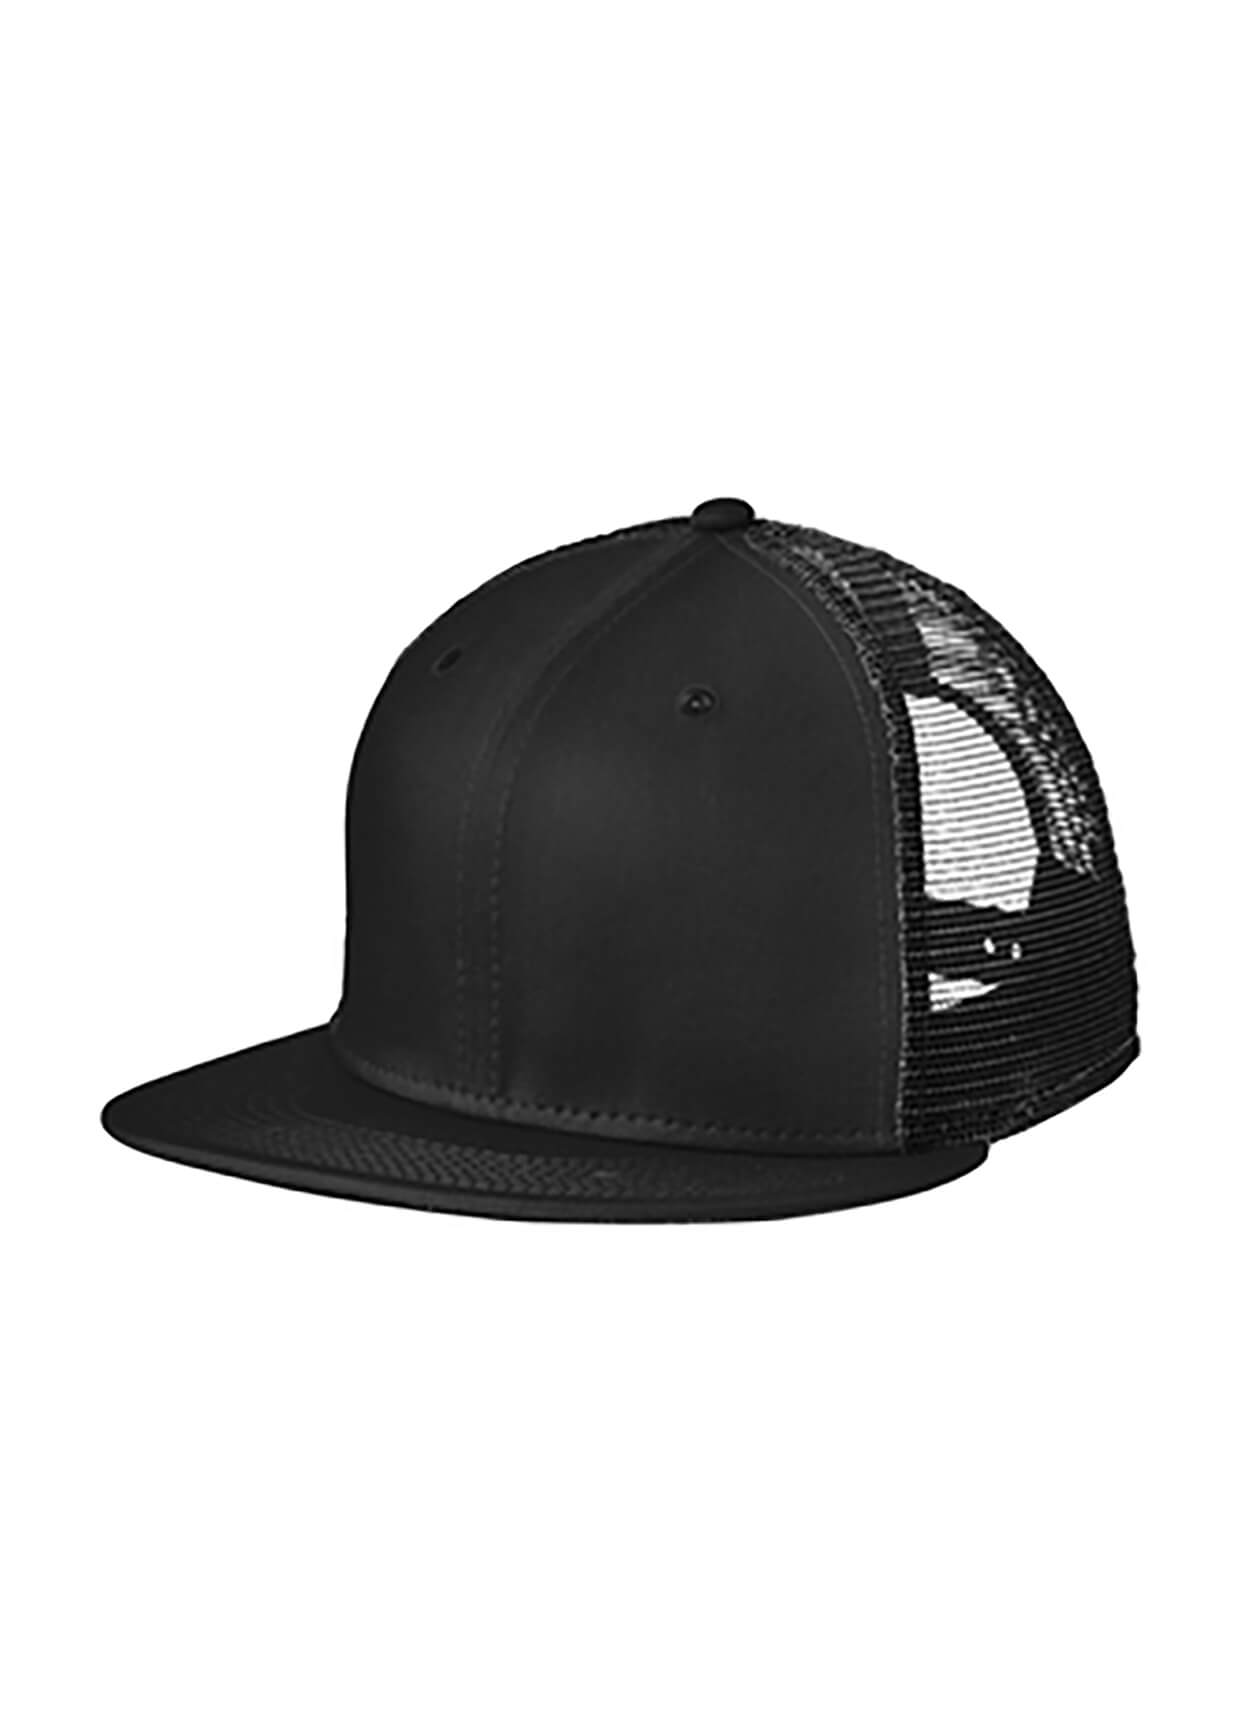 New Era Black / Black Standard Fit Snapback Trucker Cap